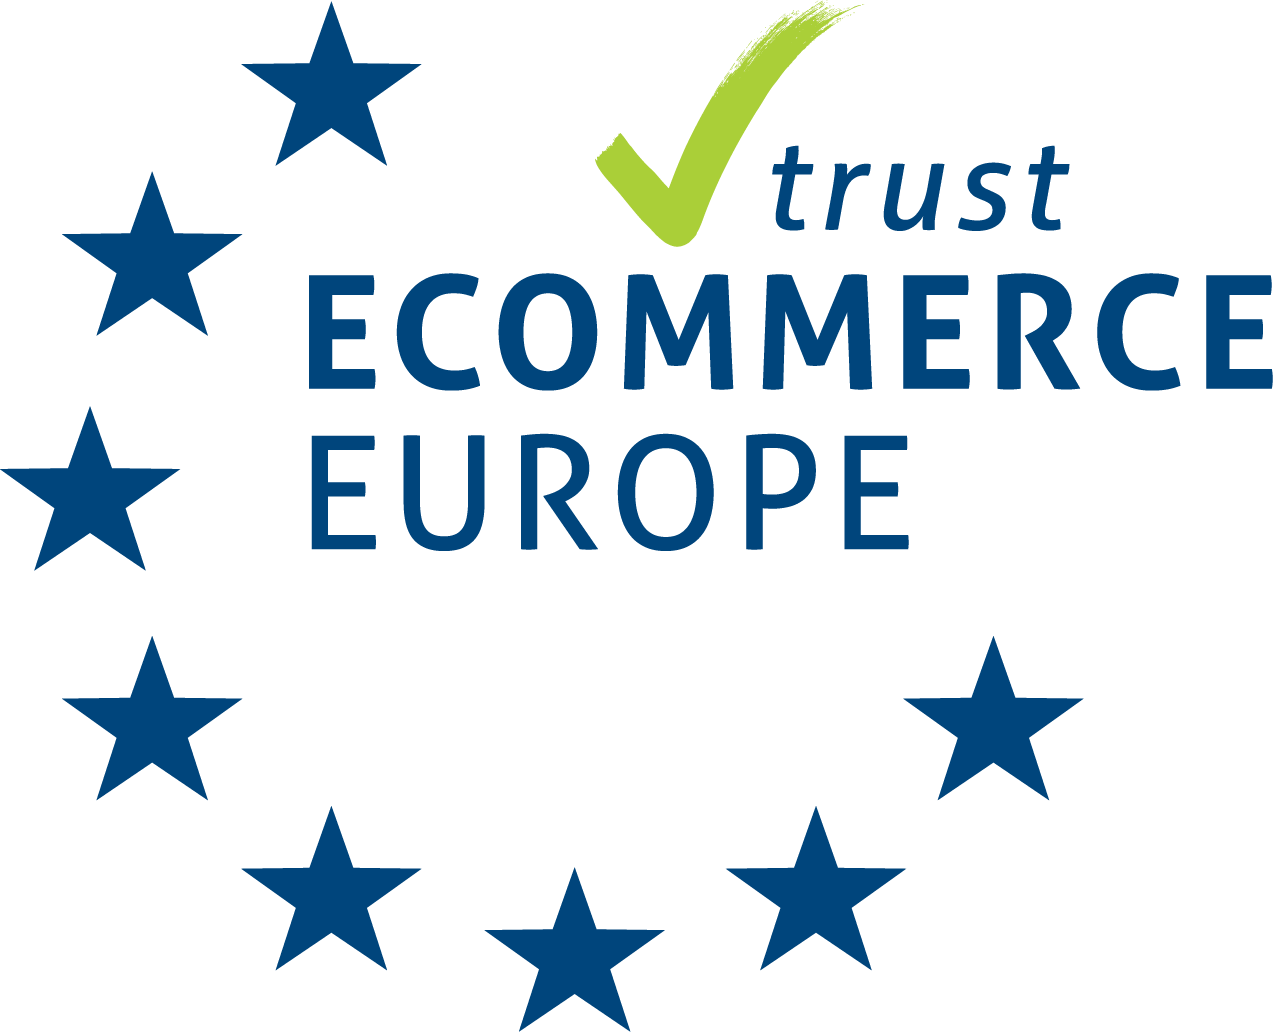 Ecommerce_Europe_Trustmark.png